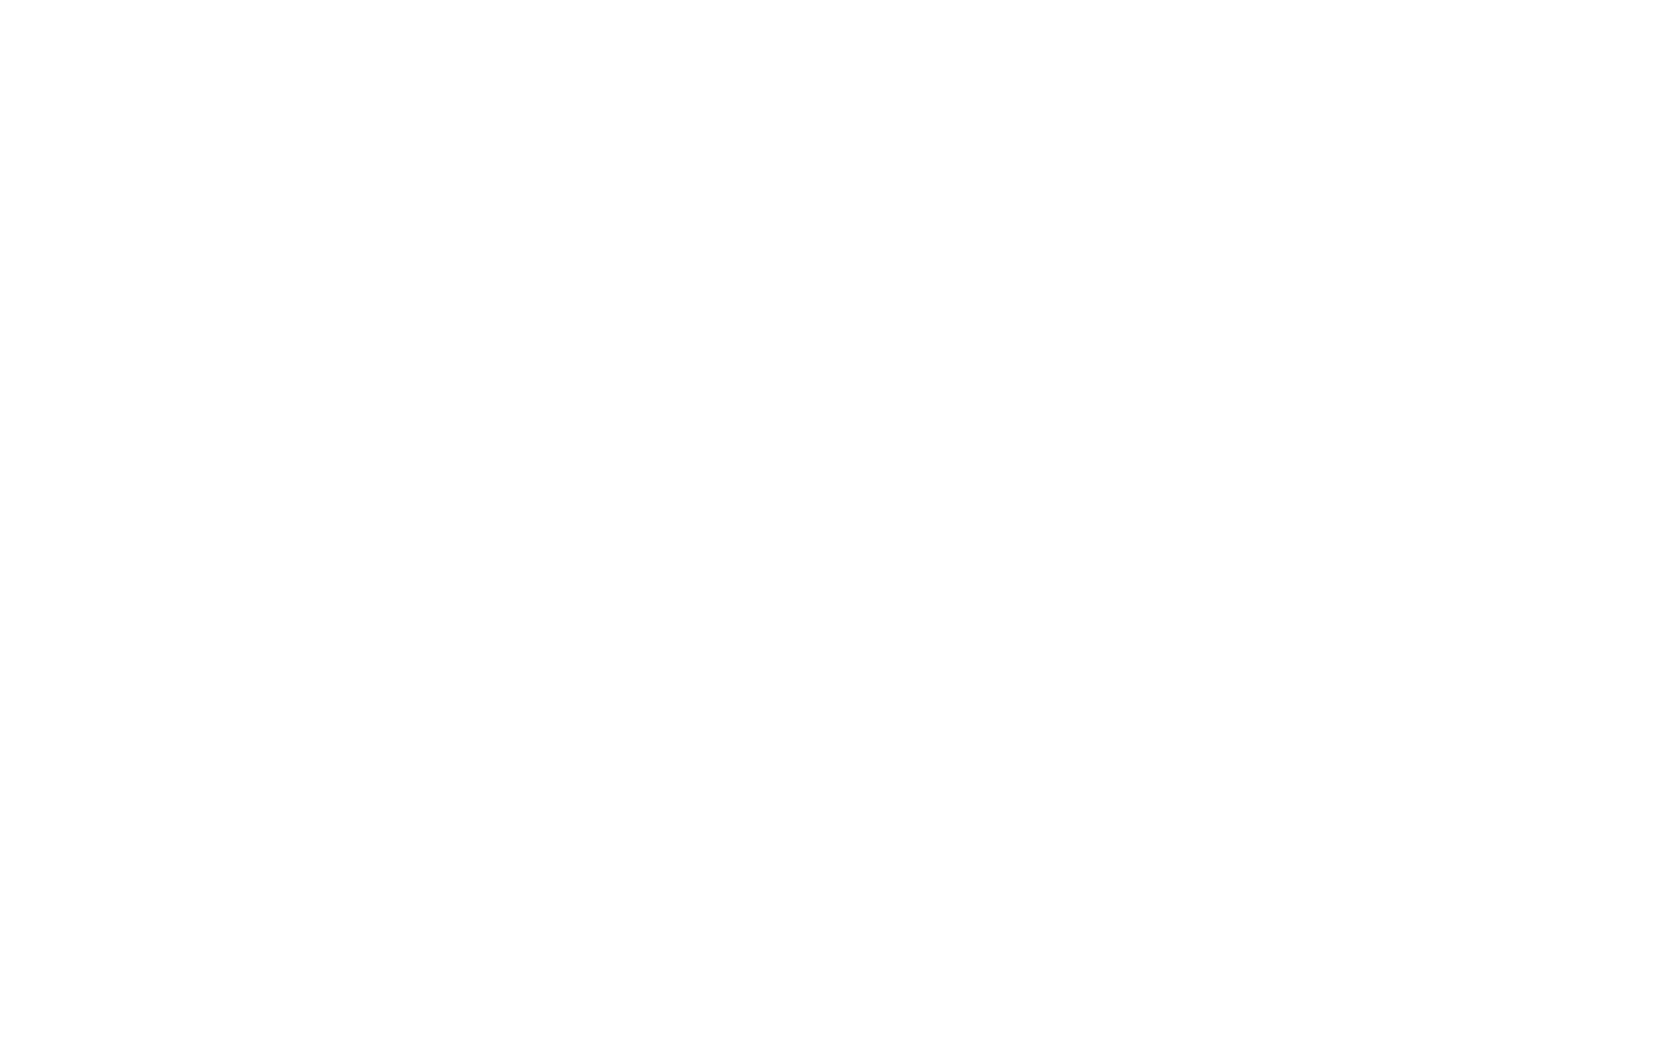 Seeds of Leslie